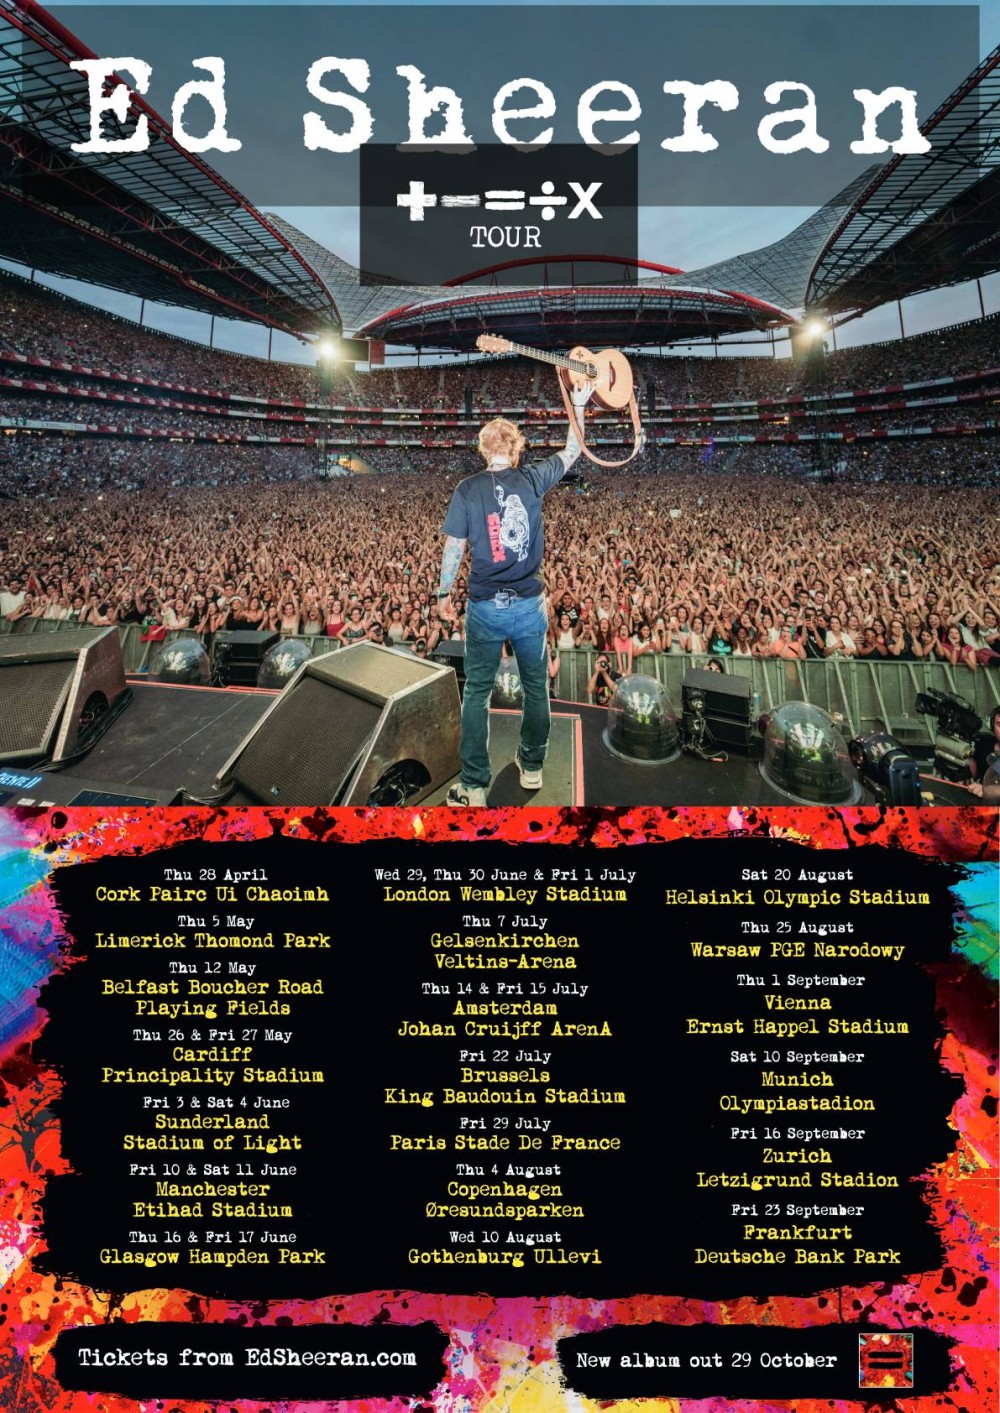 Ed Sheeran's ‘+ - = ÷ x Tour’